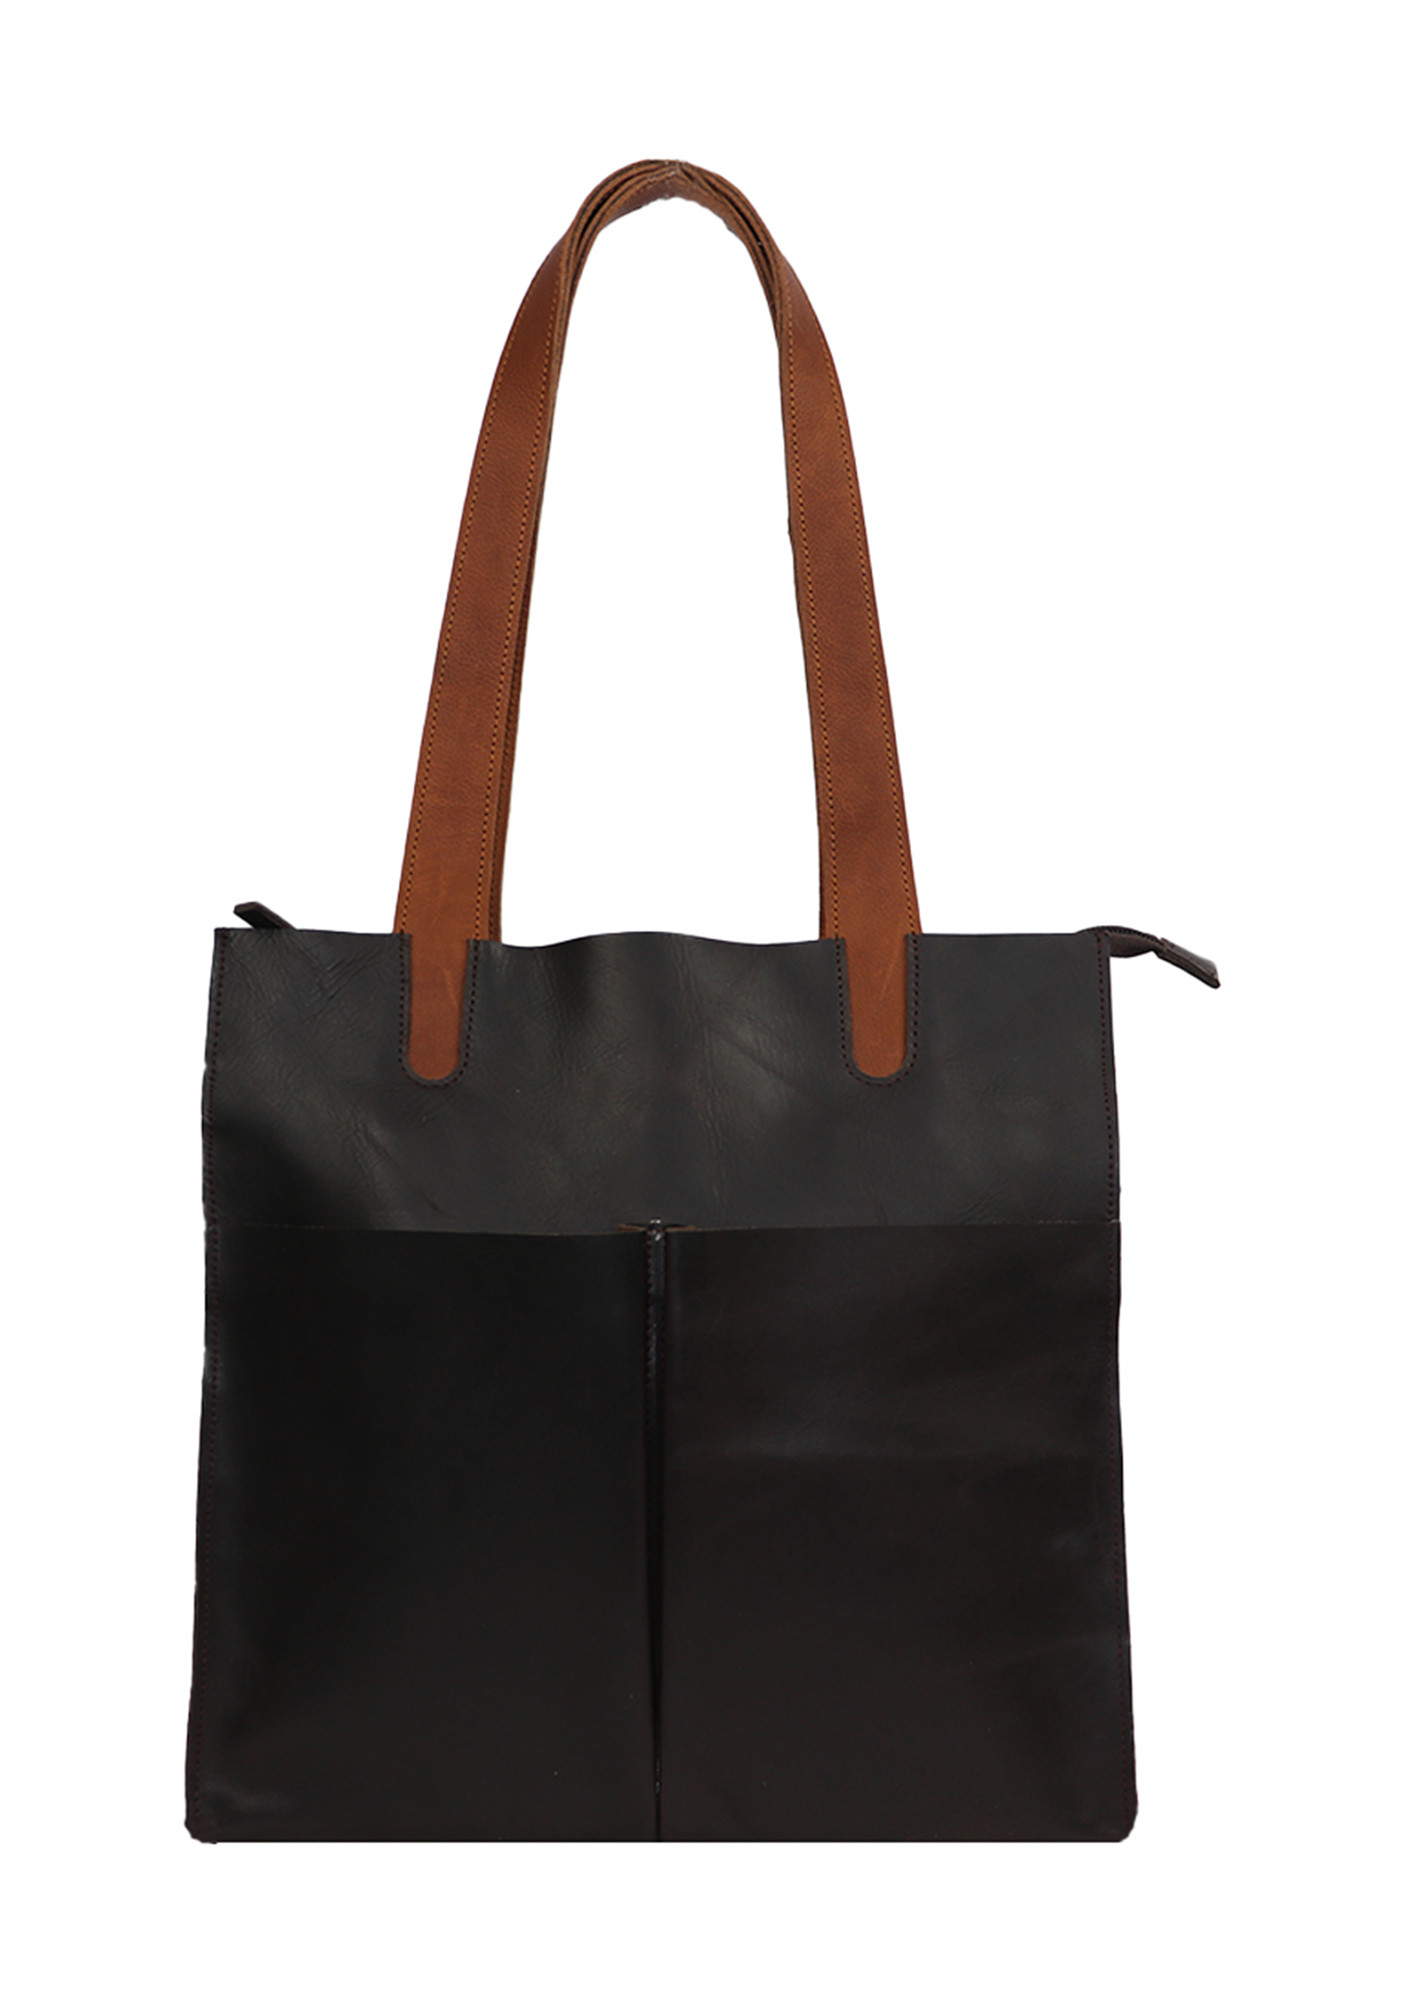 Tote Bag With Leather Shoulder Straps-  Black